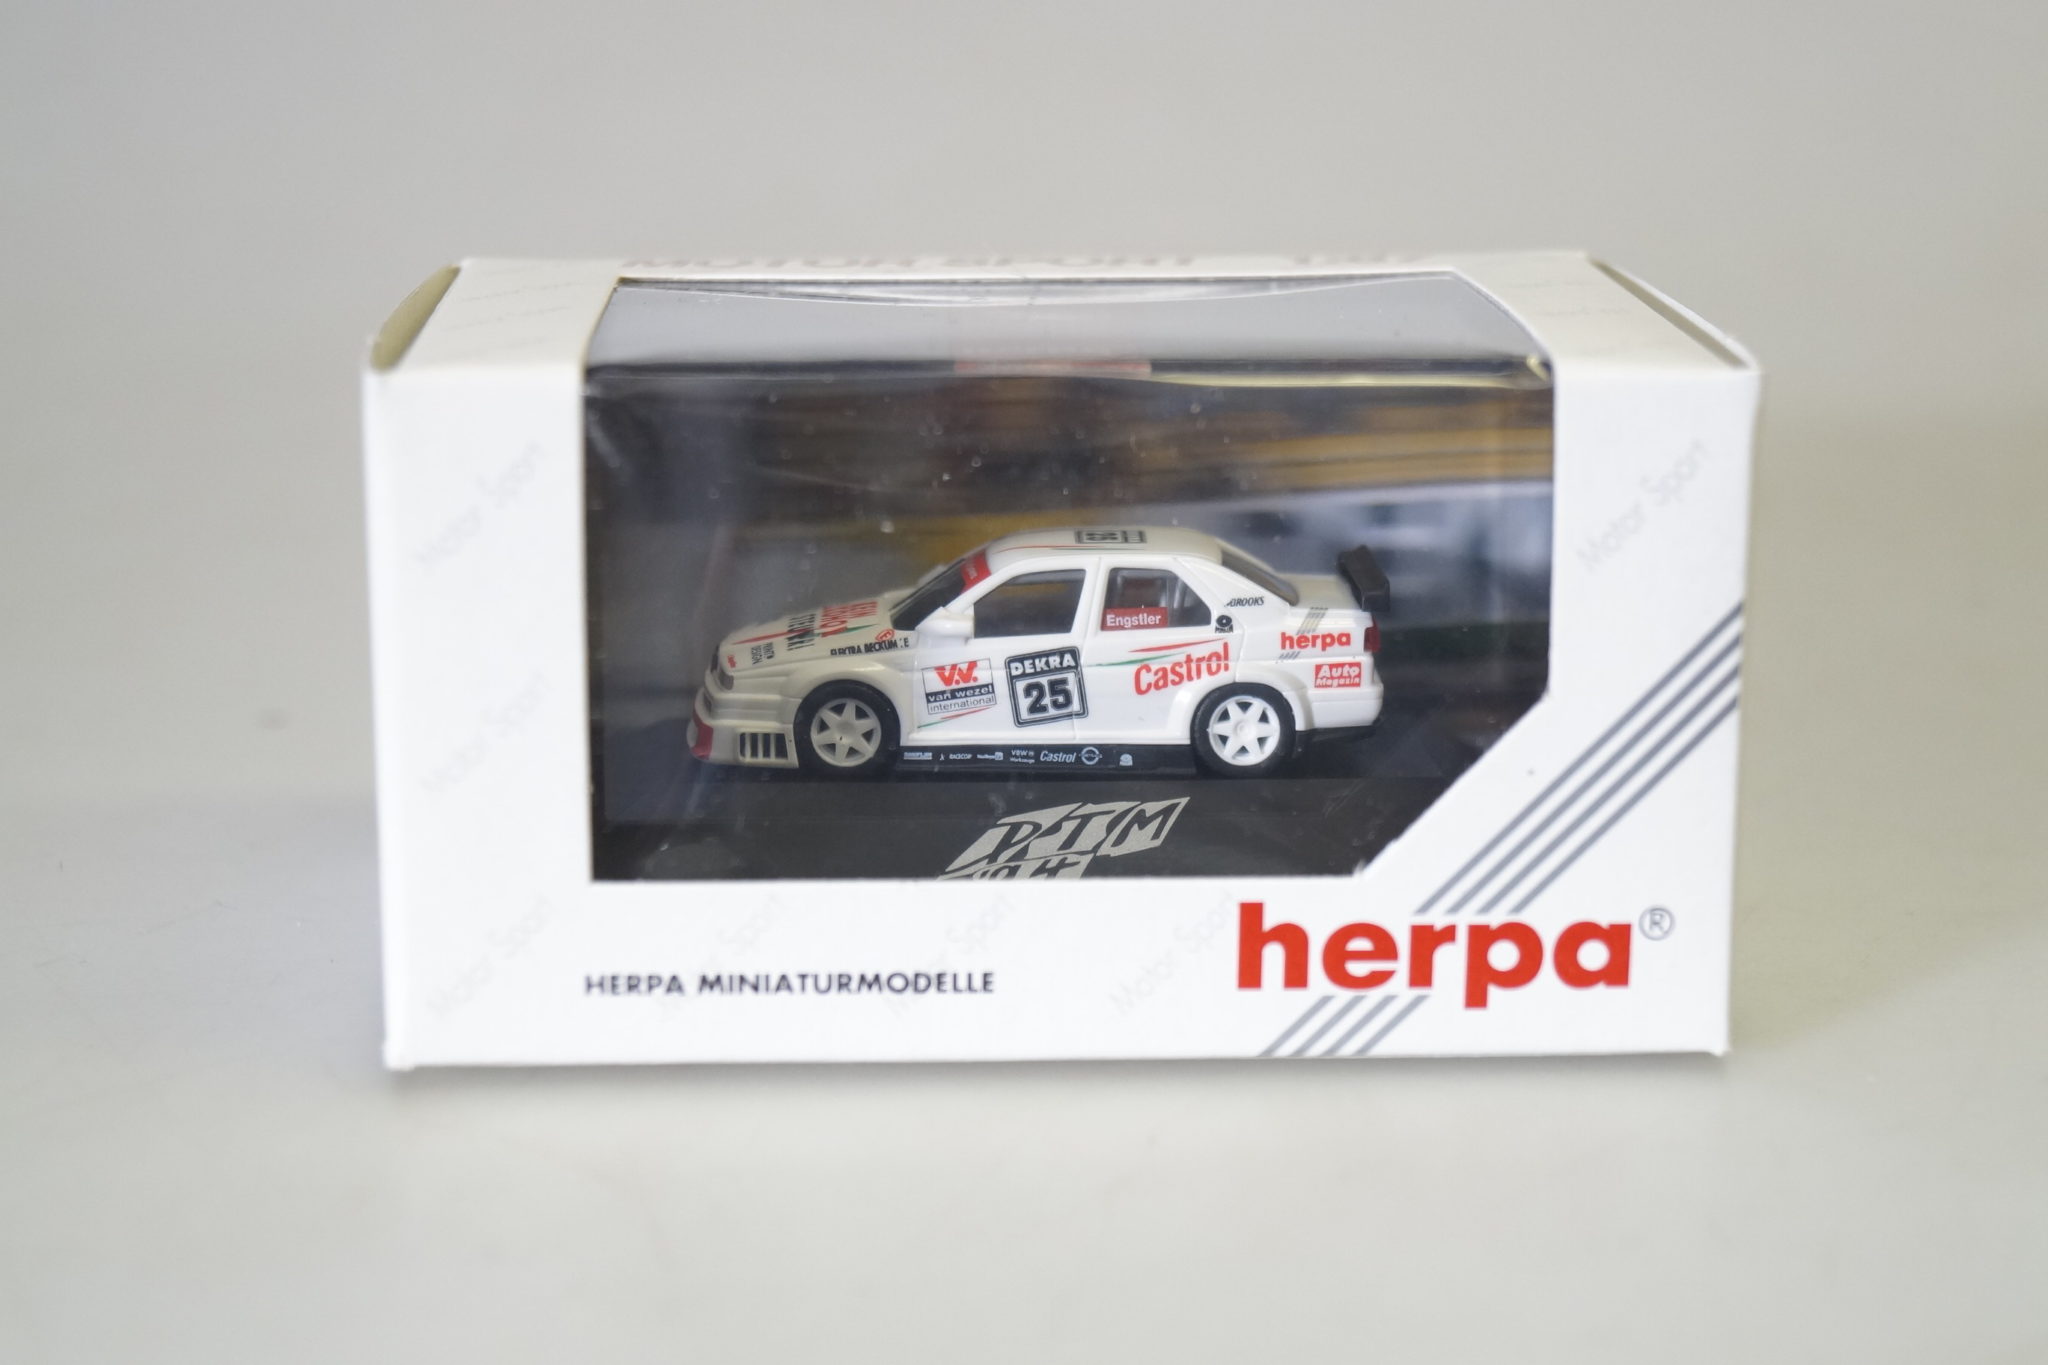 Herpa SPORT AUTOMOBILE Nº 036078 ALFA ROMEO 155 v6 ENGSTLER Herpa équipe dtm´94 gk26 